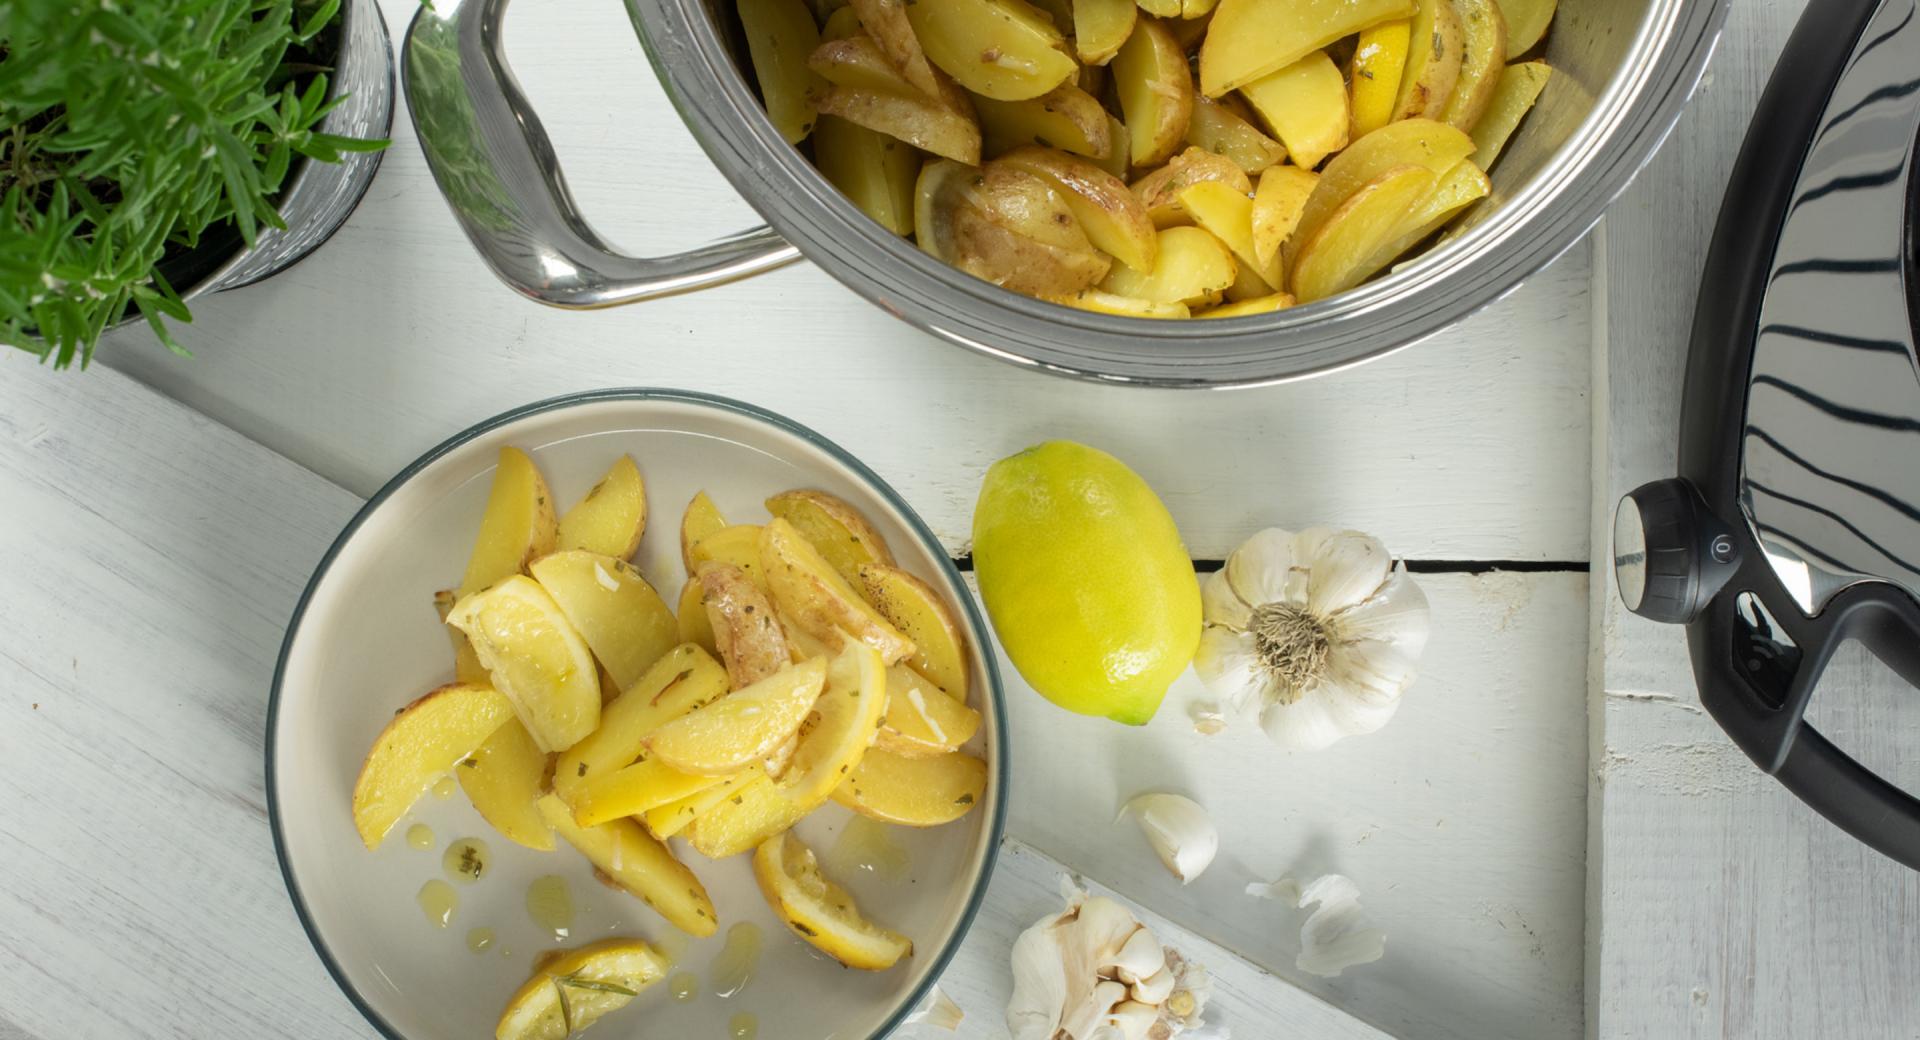 Lemon and garlic potatoes